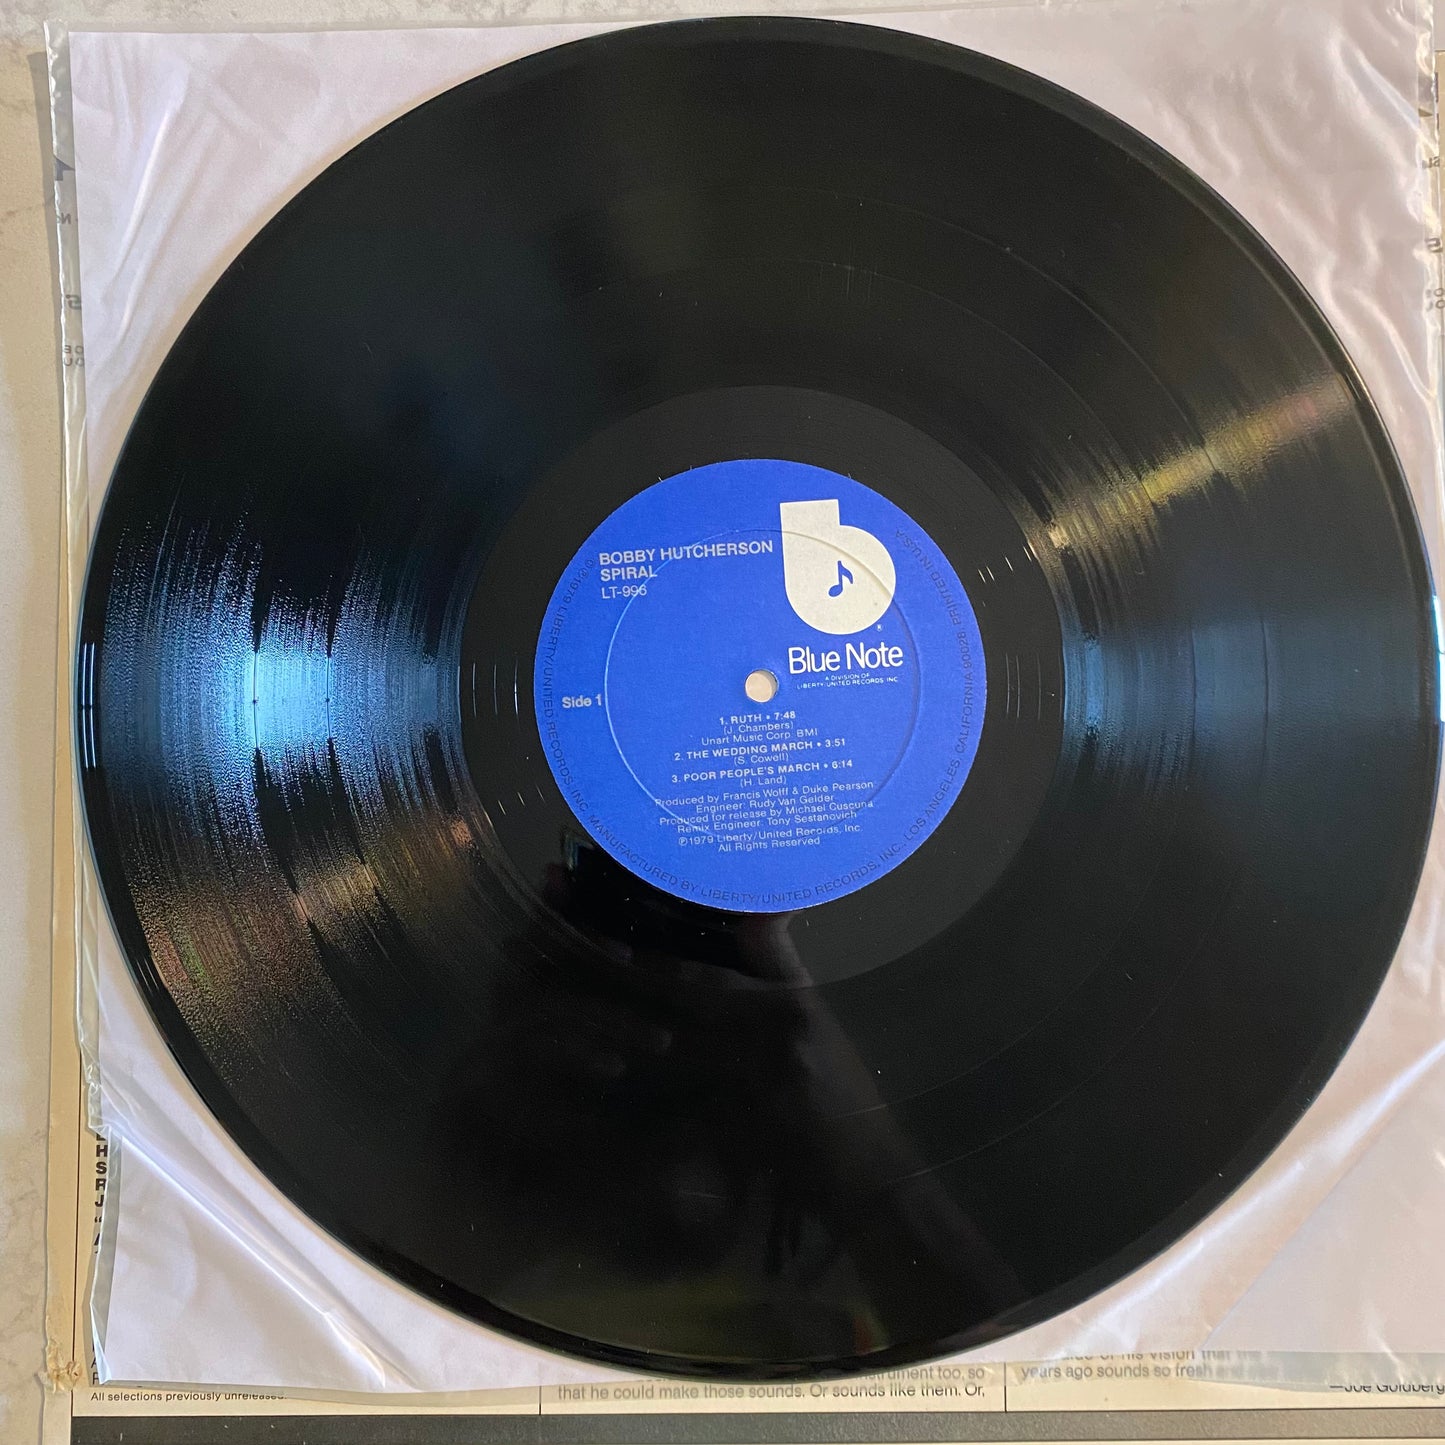 Bobby Hutcherson - Spiral (LP, Album)